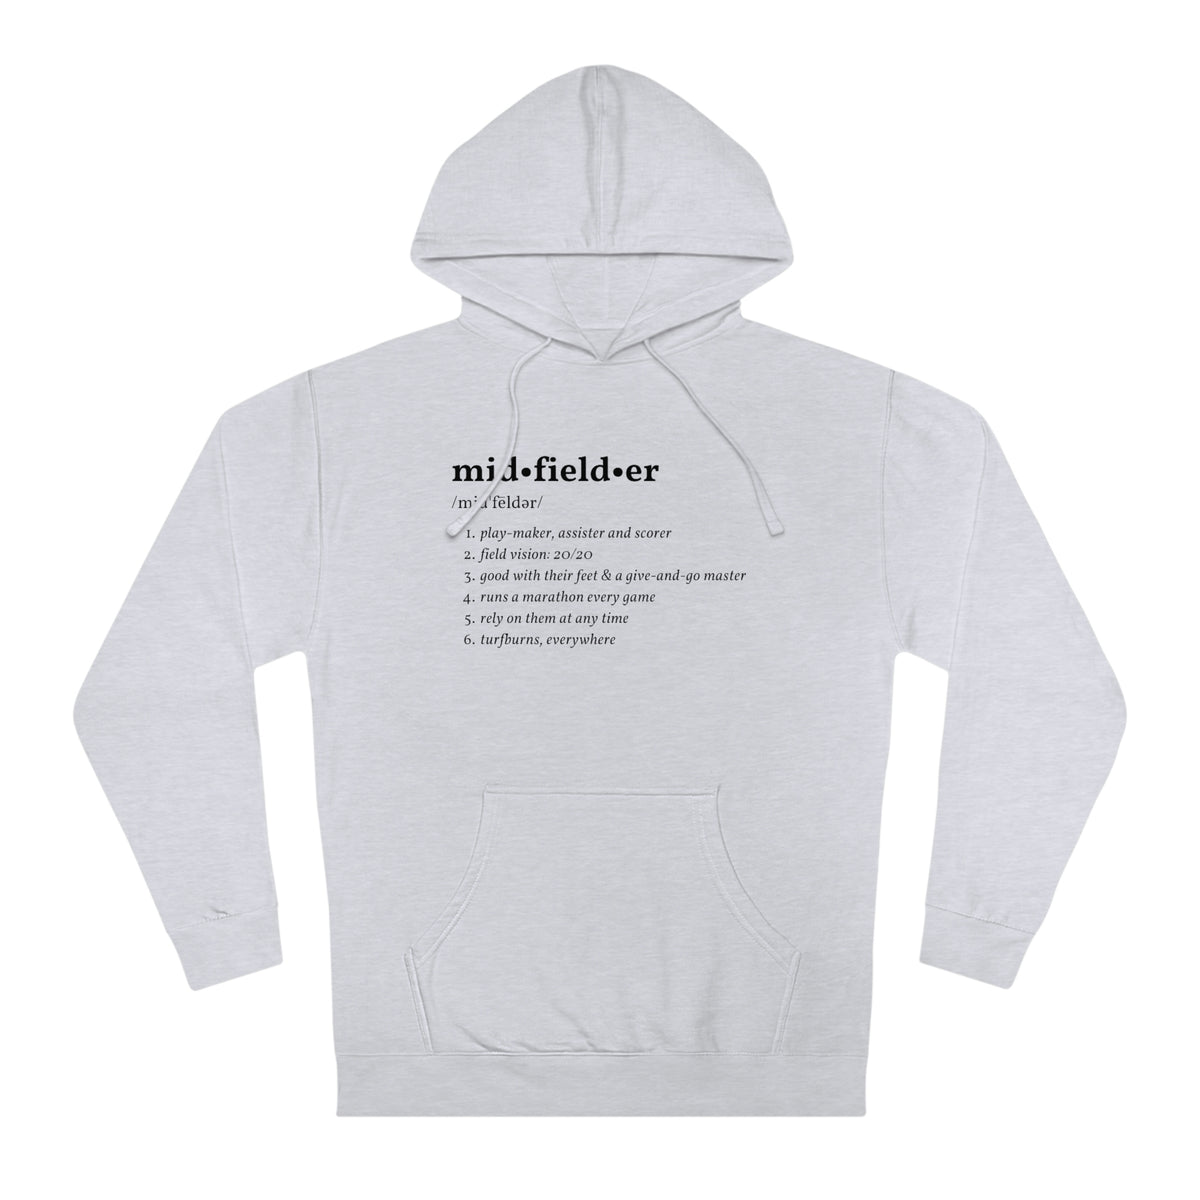 Midfielder Definition Adult Hooded Sweatshirt